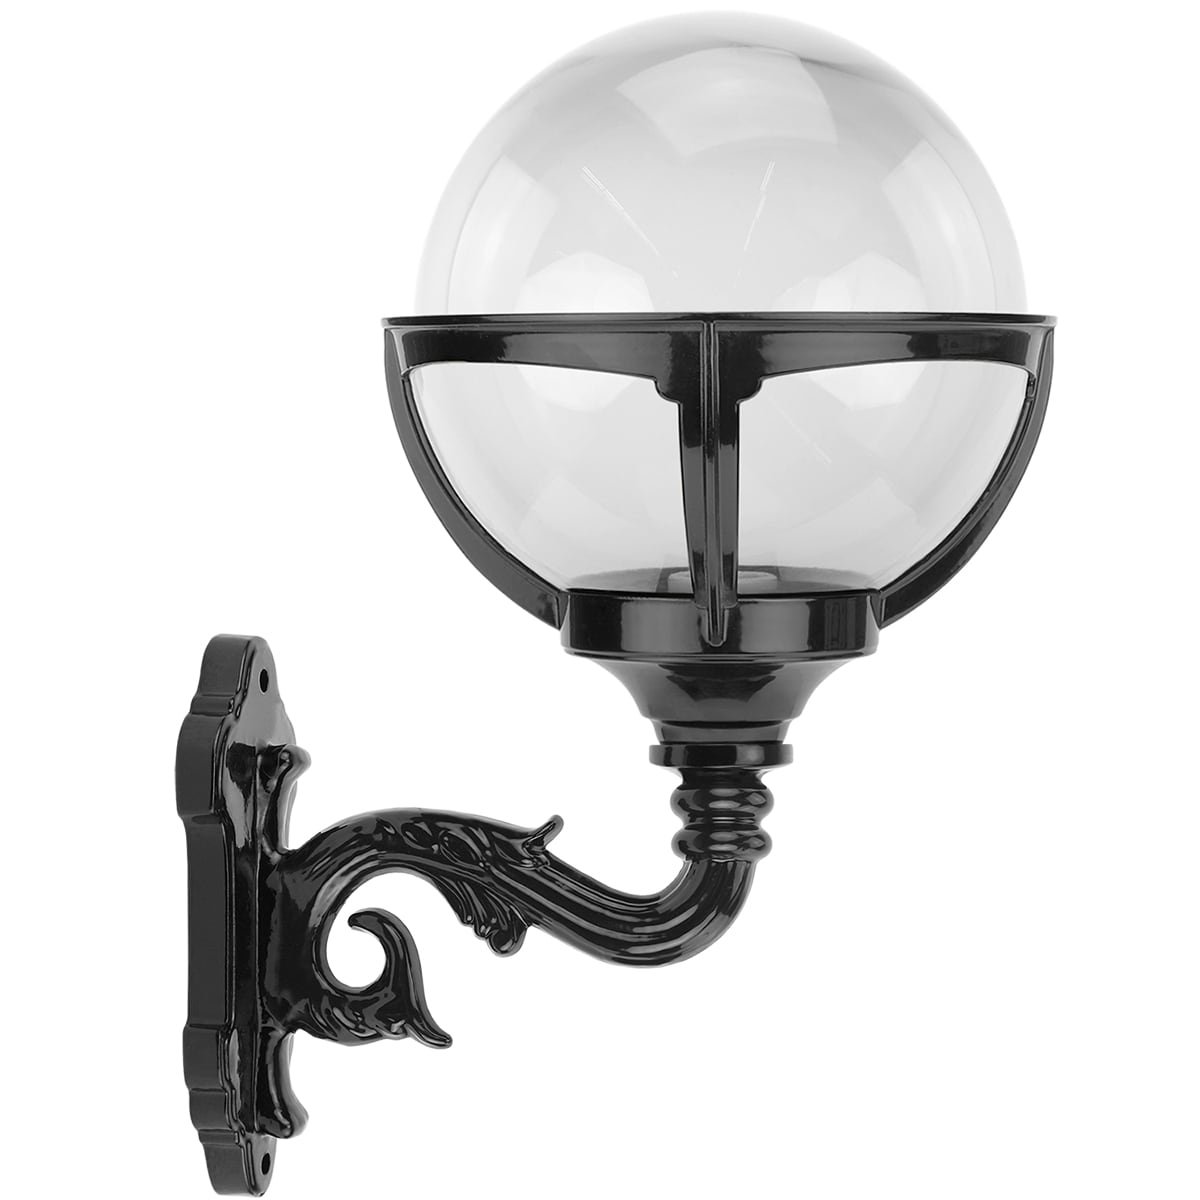 Fence lamp clear globe Assendelft - 50 cm